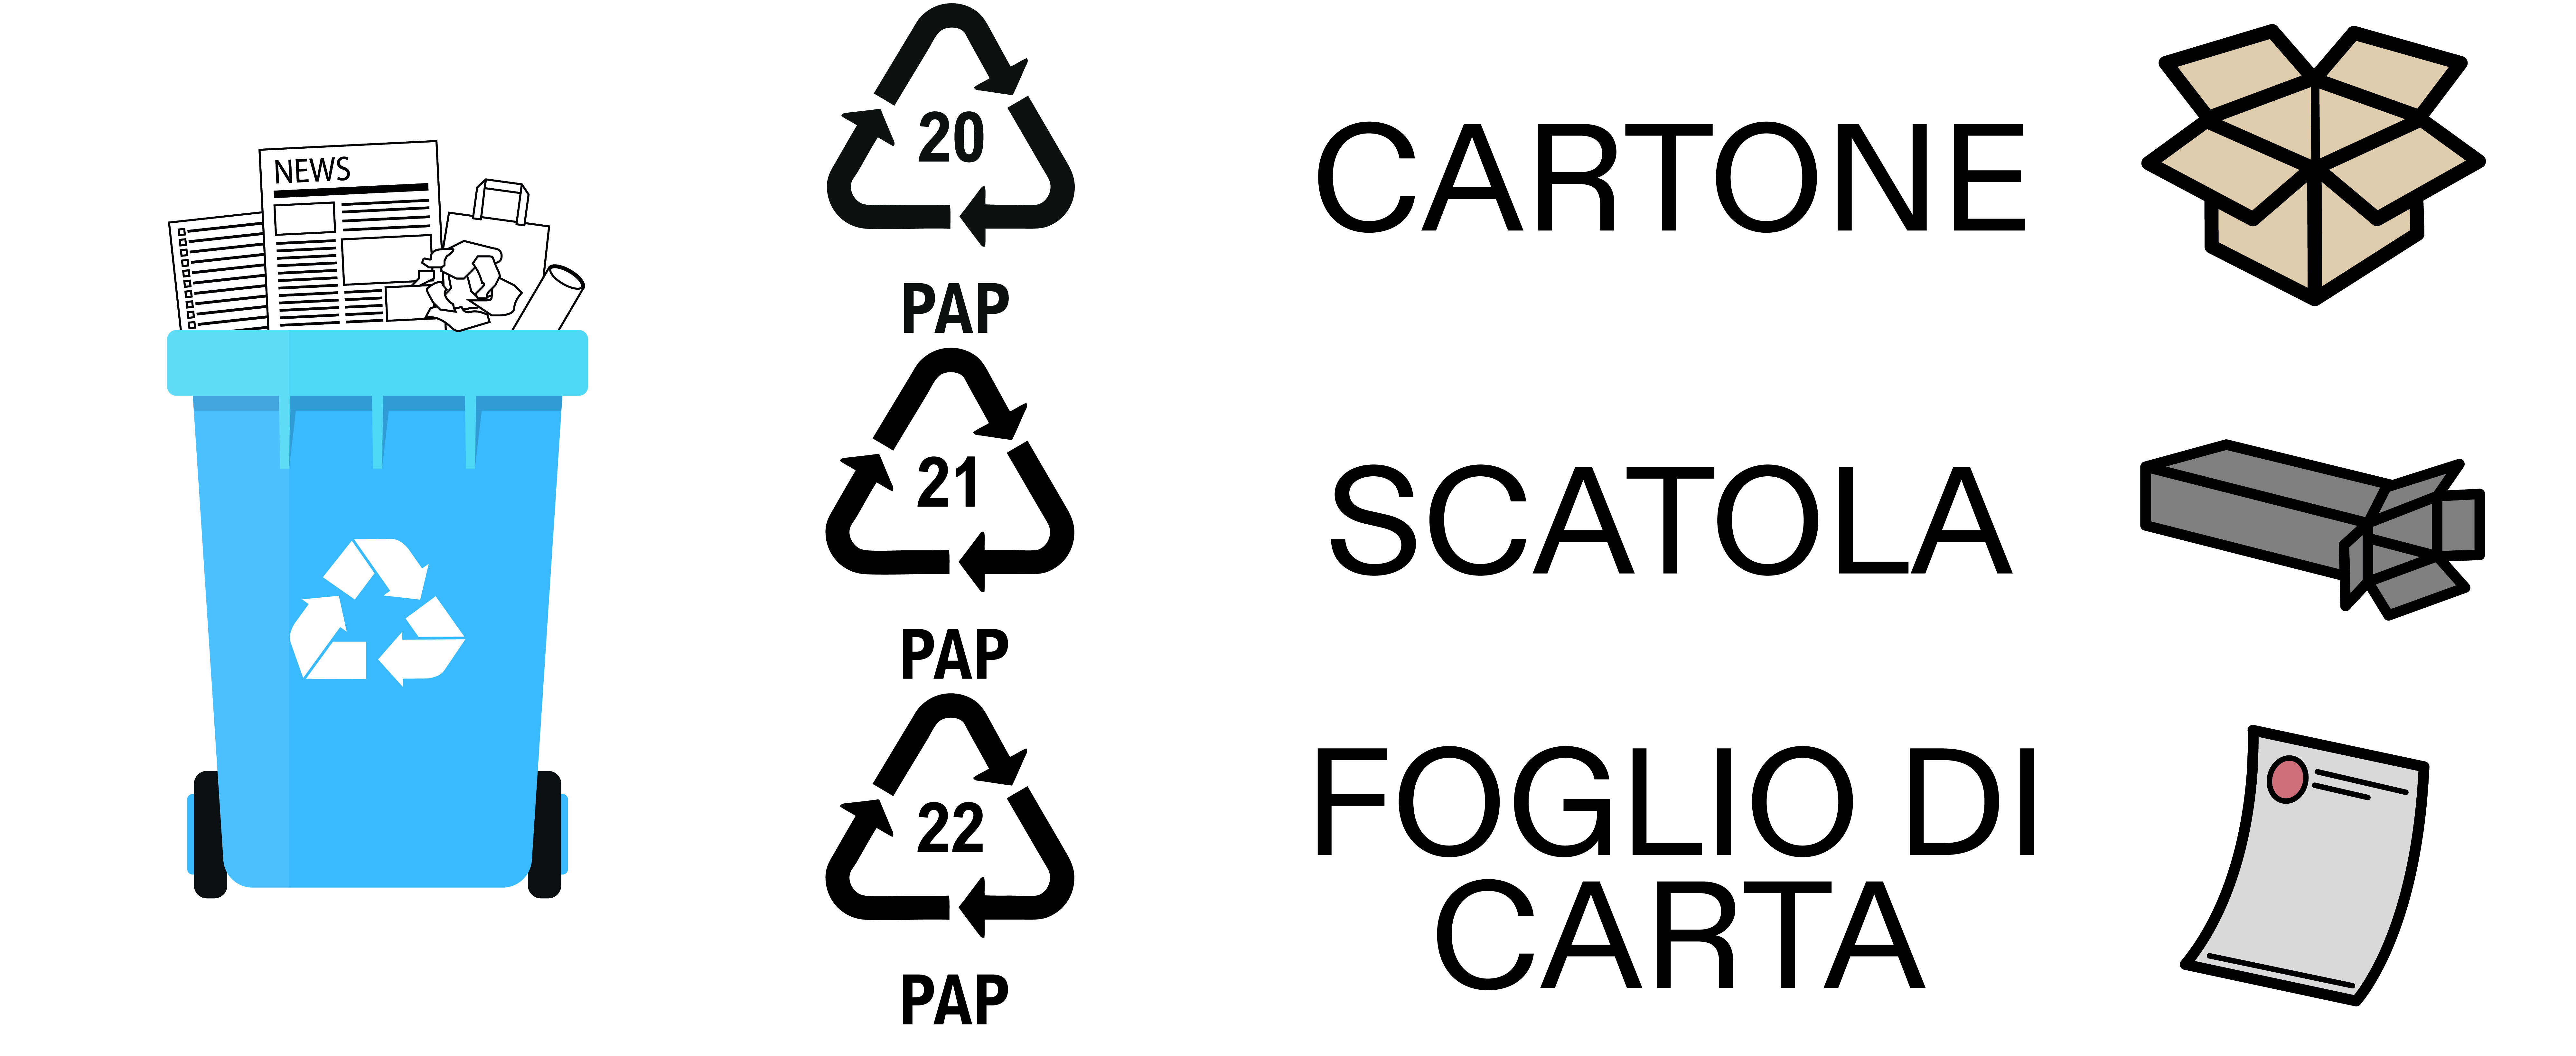 CARTA_cartone-scatola-foglio.jpg